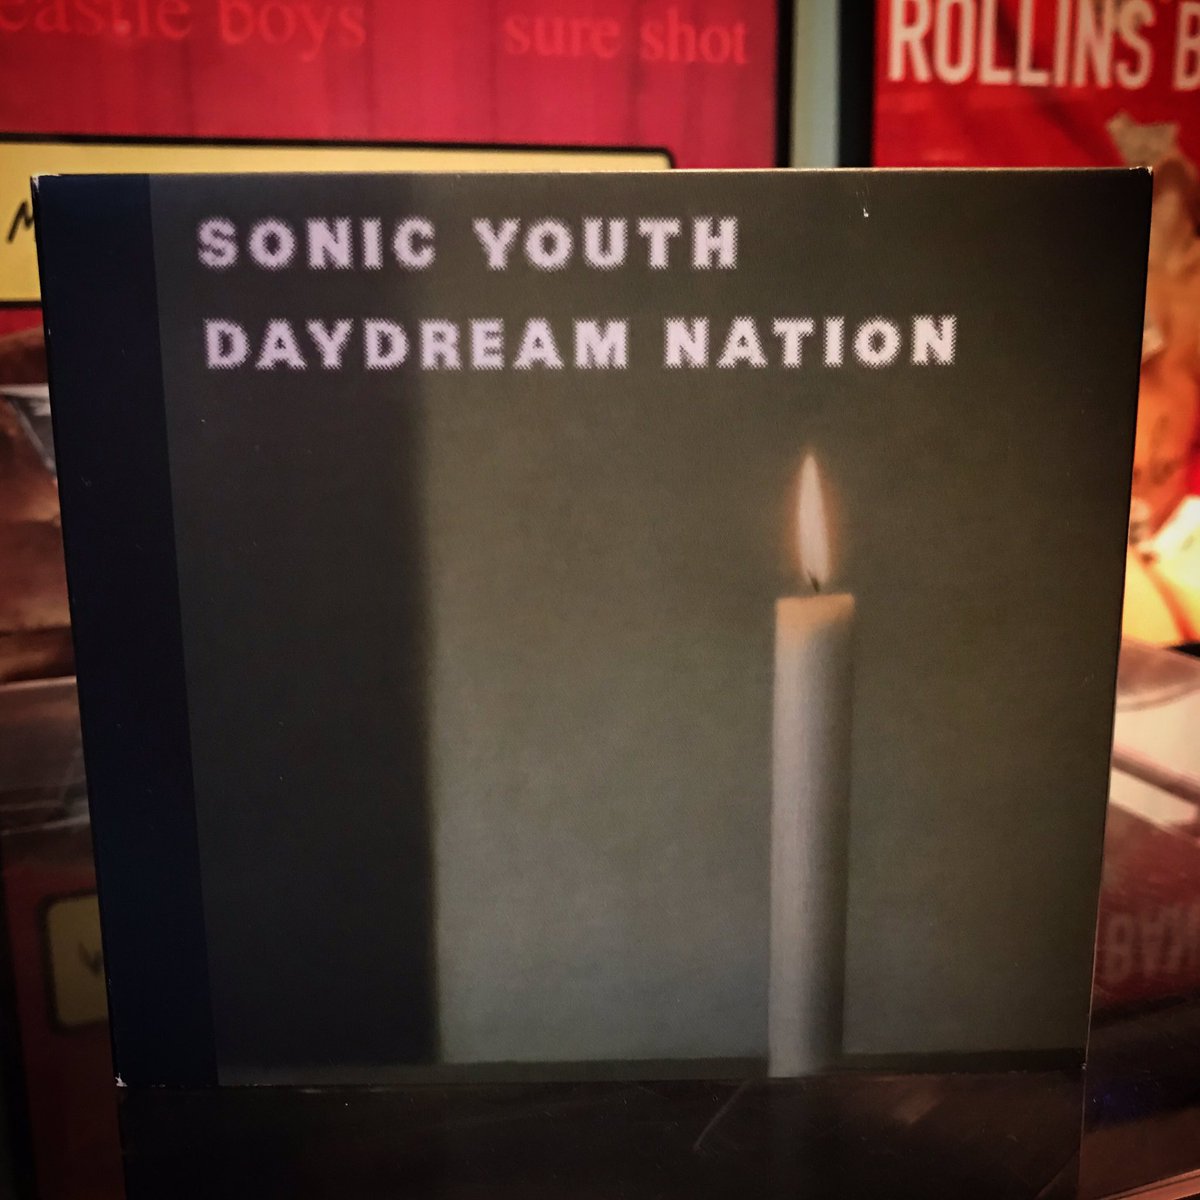 Sonic Youth’s Daydream Nation was released 10.18.88. Happy 30th. 
-
@sonicyouth #sonicyouth #daydreamnation #thurstonmoore #kimgordon @KimletGordon #leerenaldo @leeranaldo #steveshelley #mikewatt